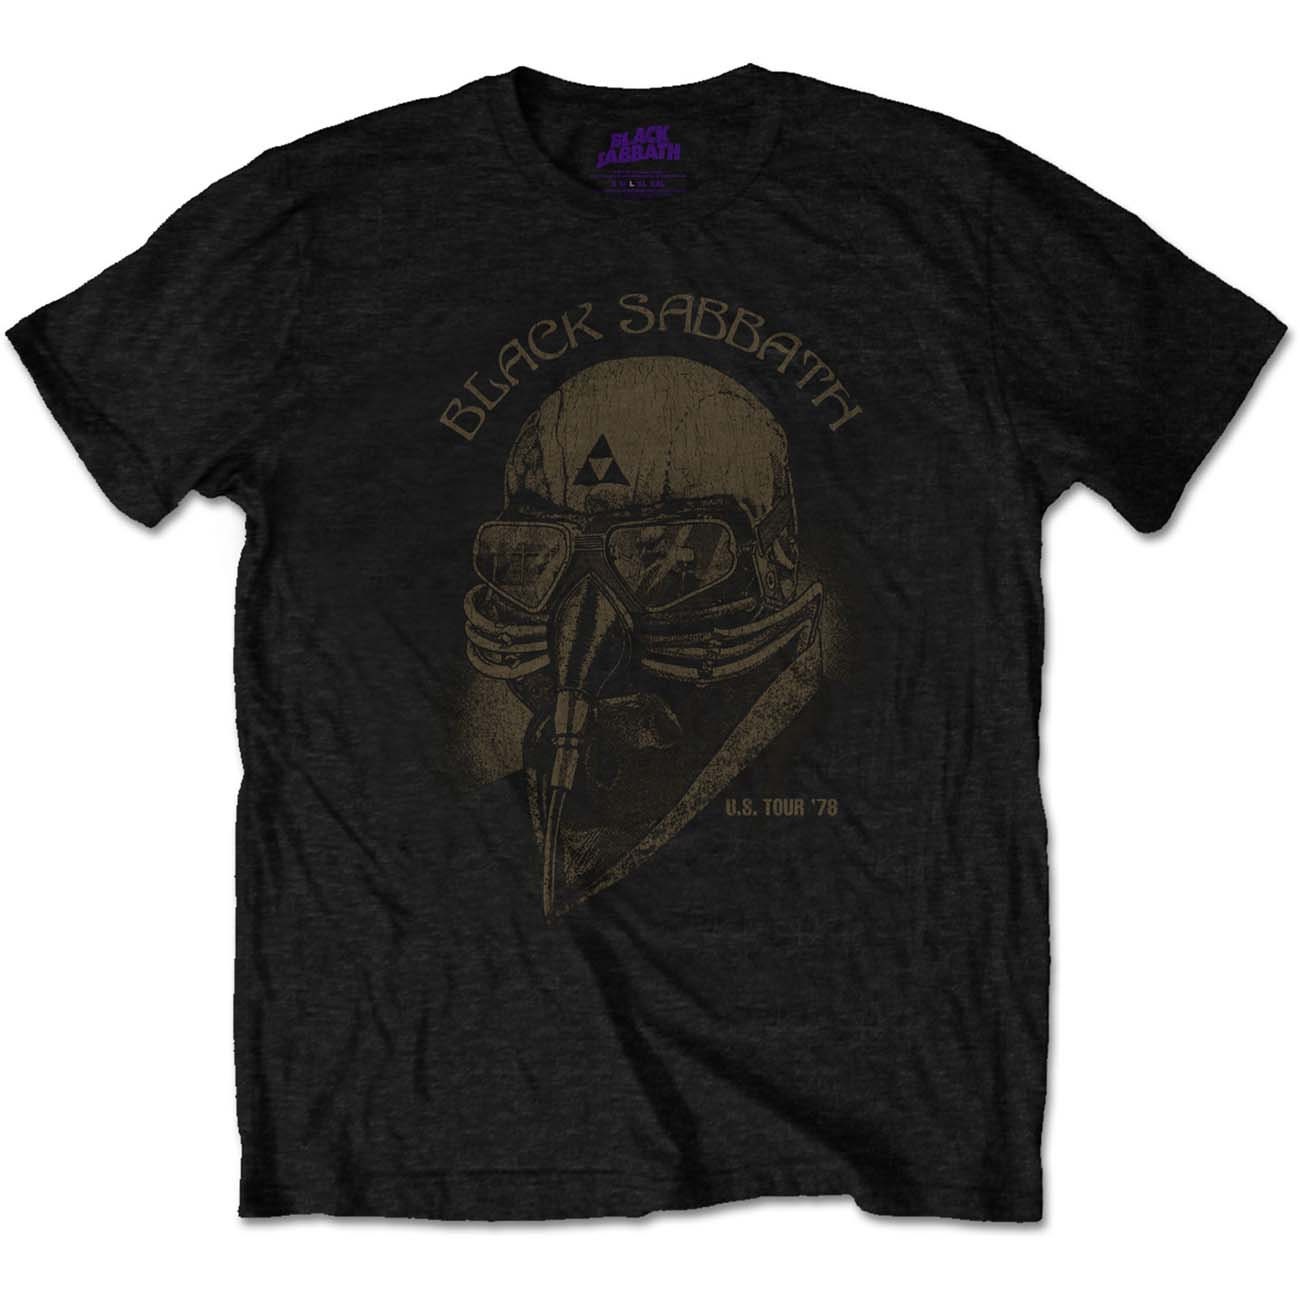 Discover Black Sabbath Shirt, Heavy Metal Vintage Band Tee, 80s Clothing, Ozzy Osbourne Black Sabbath Merch, Gift for Fan